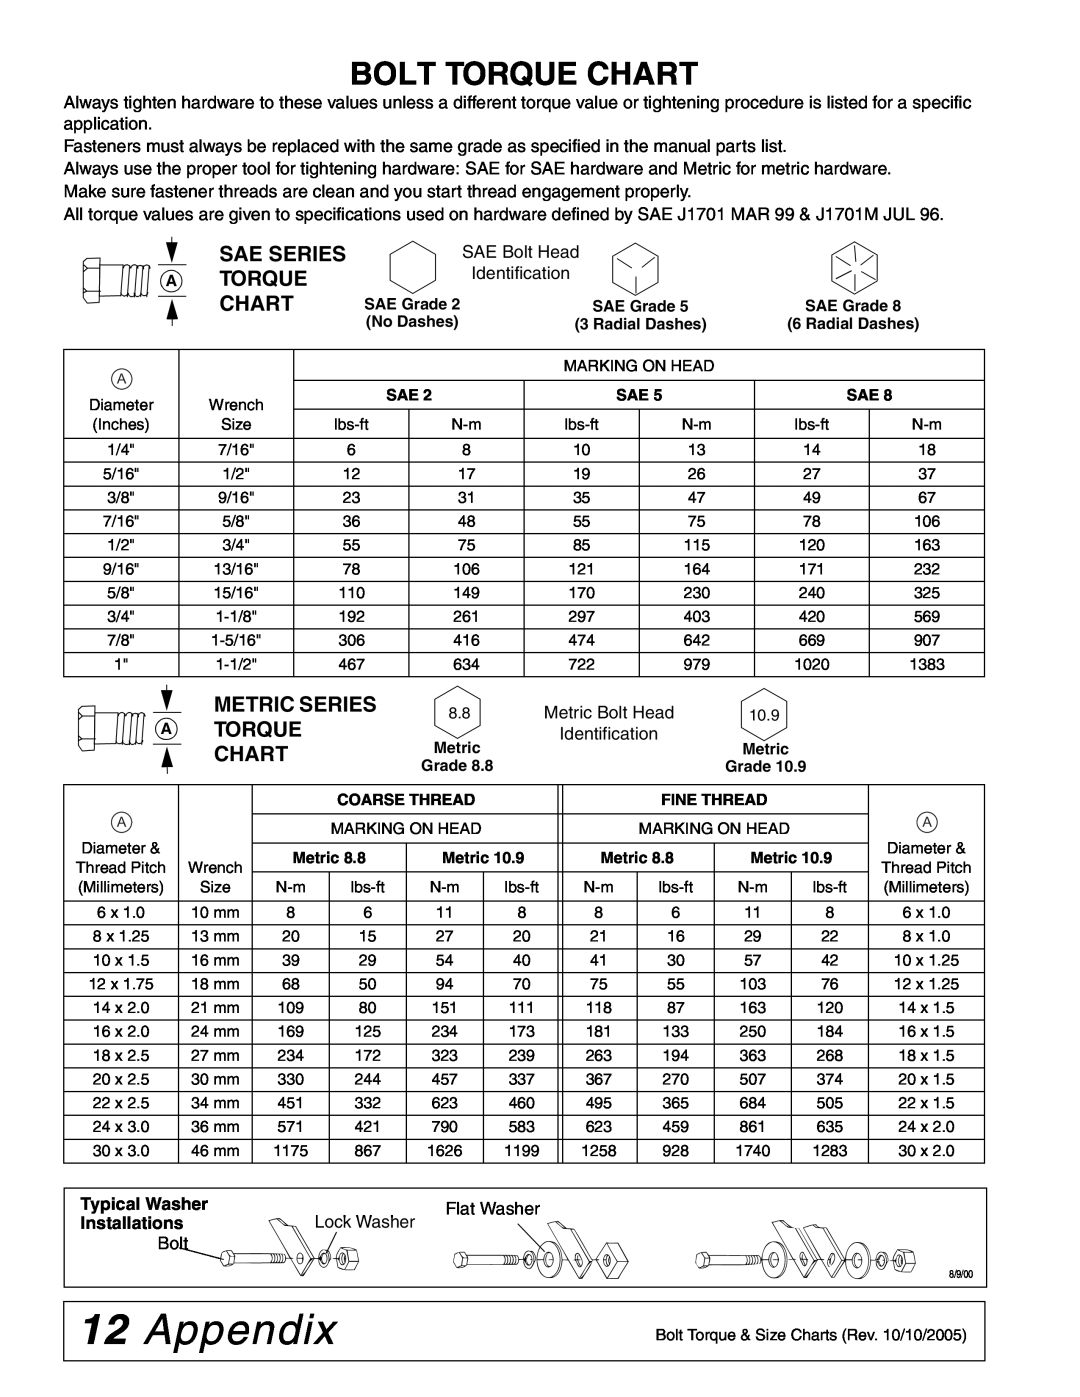 Woods Equipment MAN0115 12Appendix, Bolt Torque Chart, Sae Series A Torque Chart, Metric Series, Typical Washer 